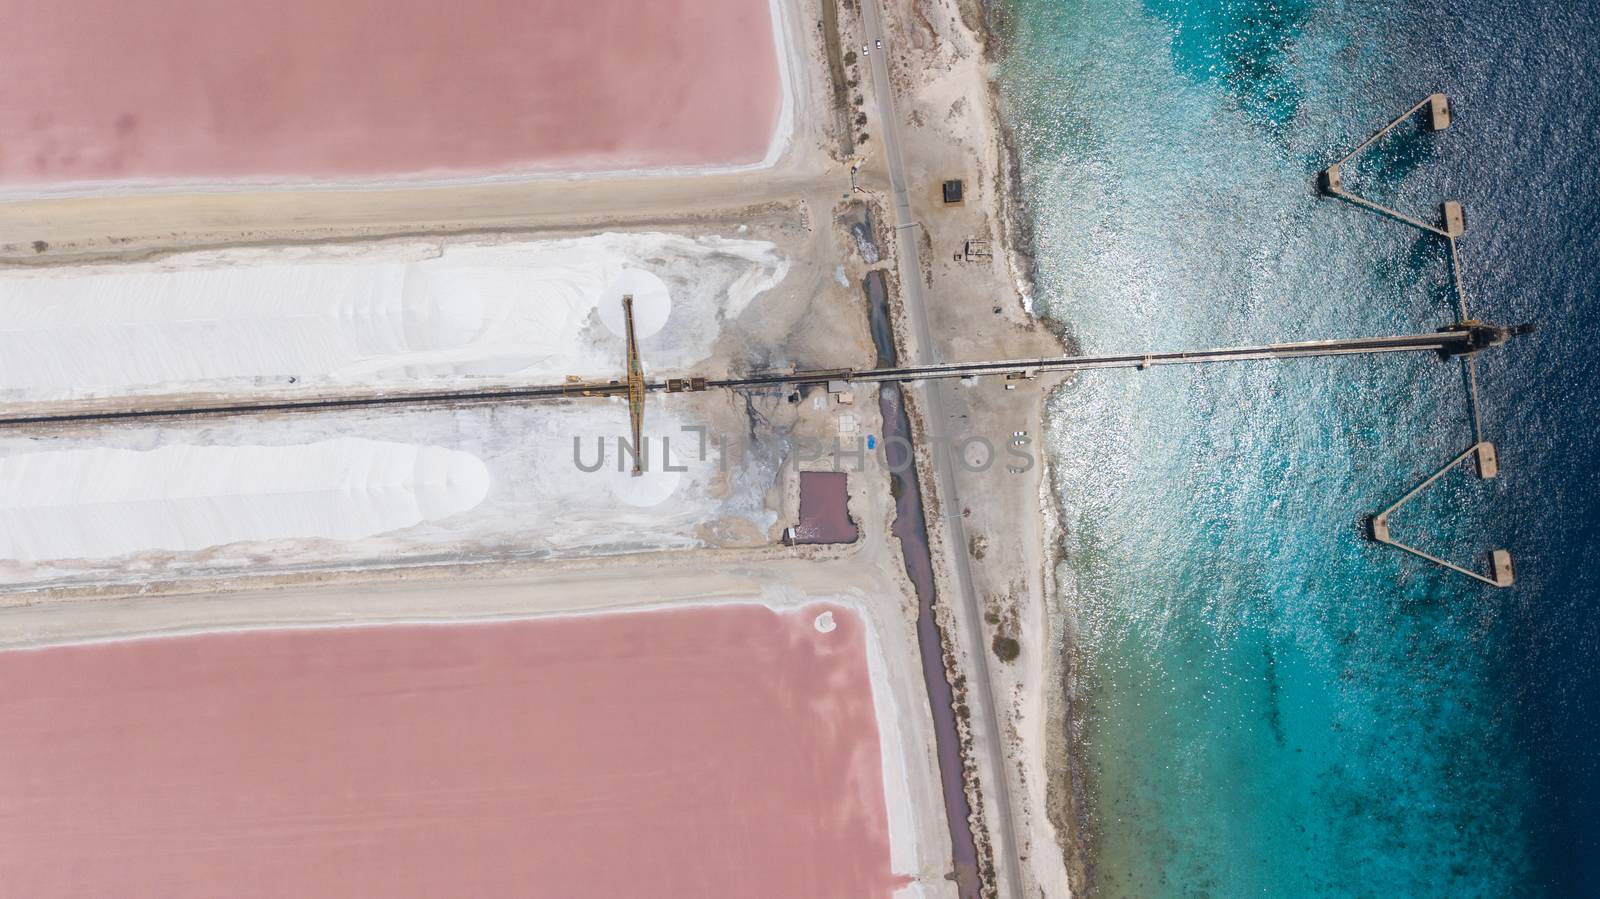 rose caribbean salt lake Bonaire island aerial drone top view by desant7474